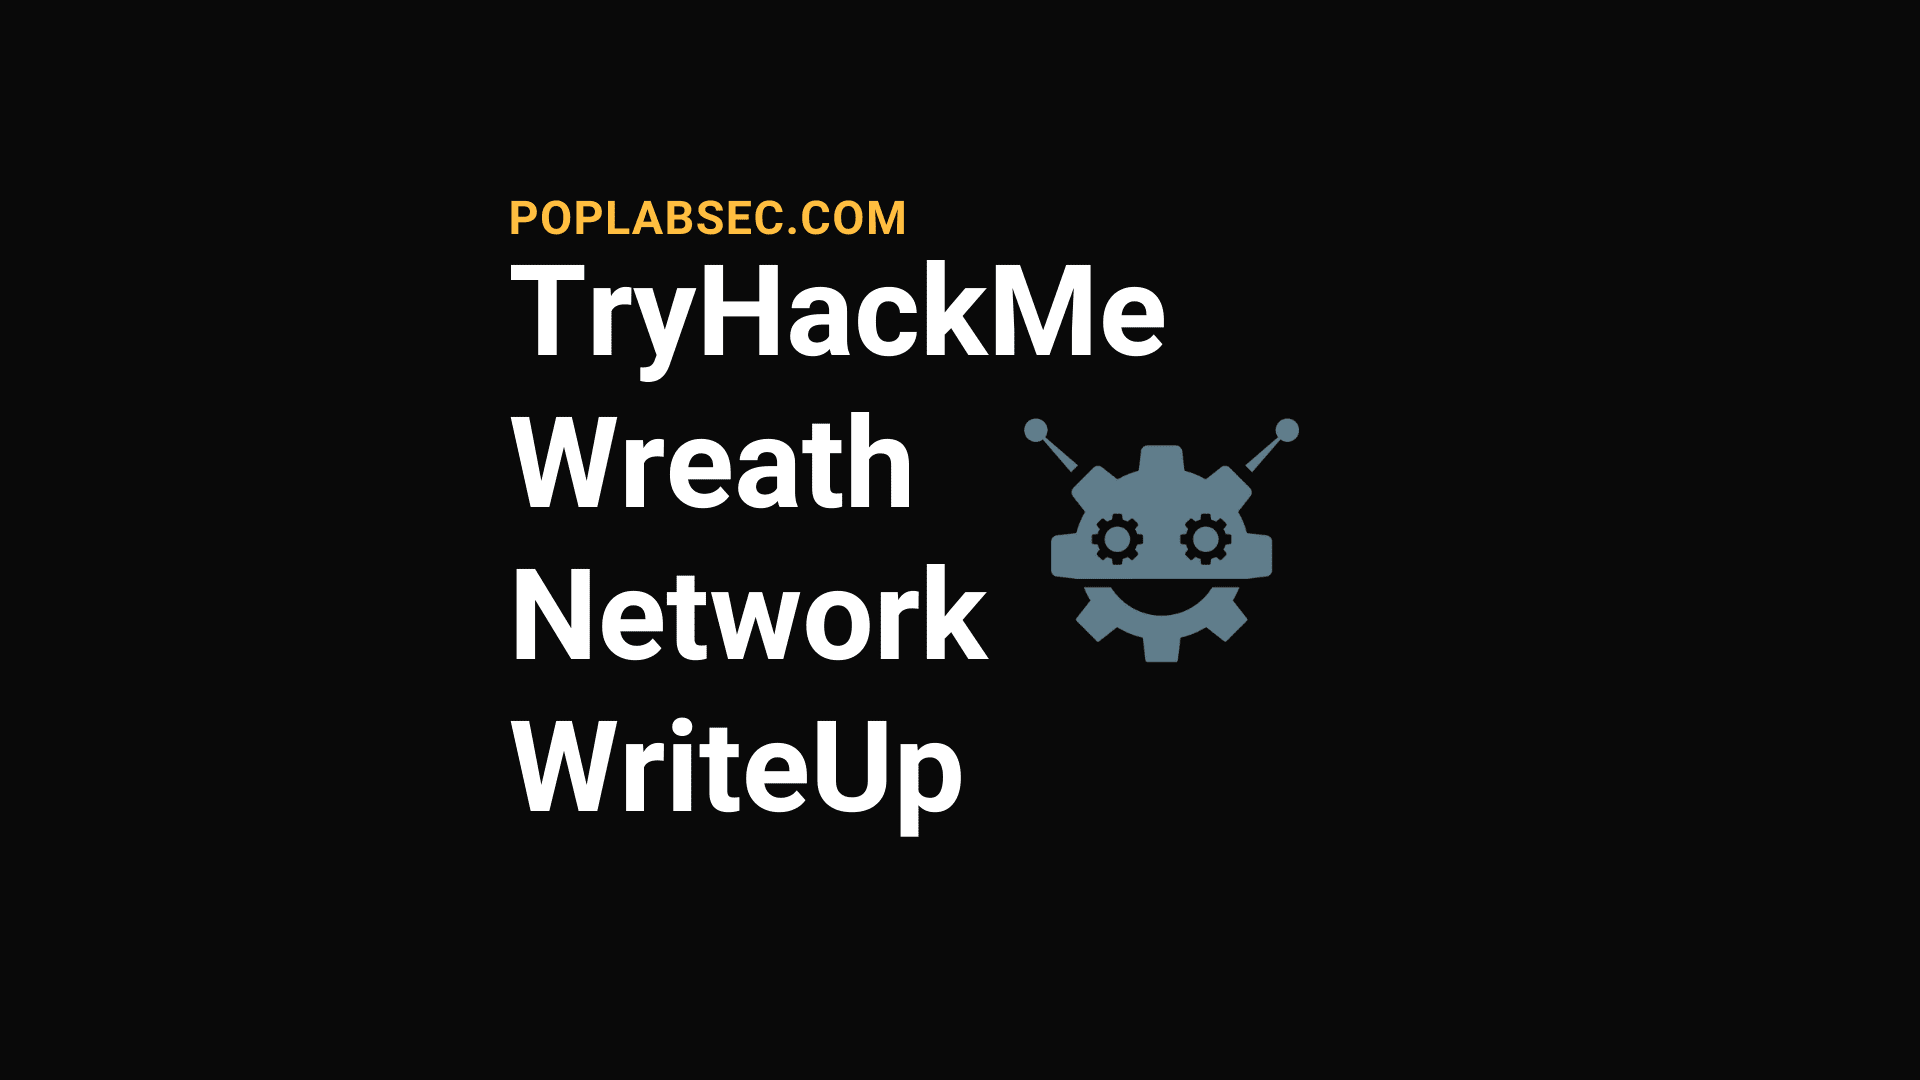 TryHackMe Wreath Network WriteUp